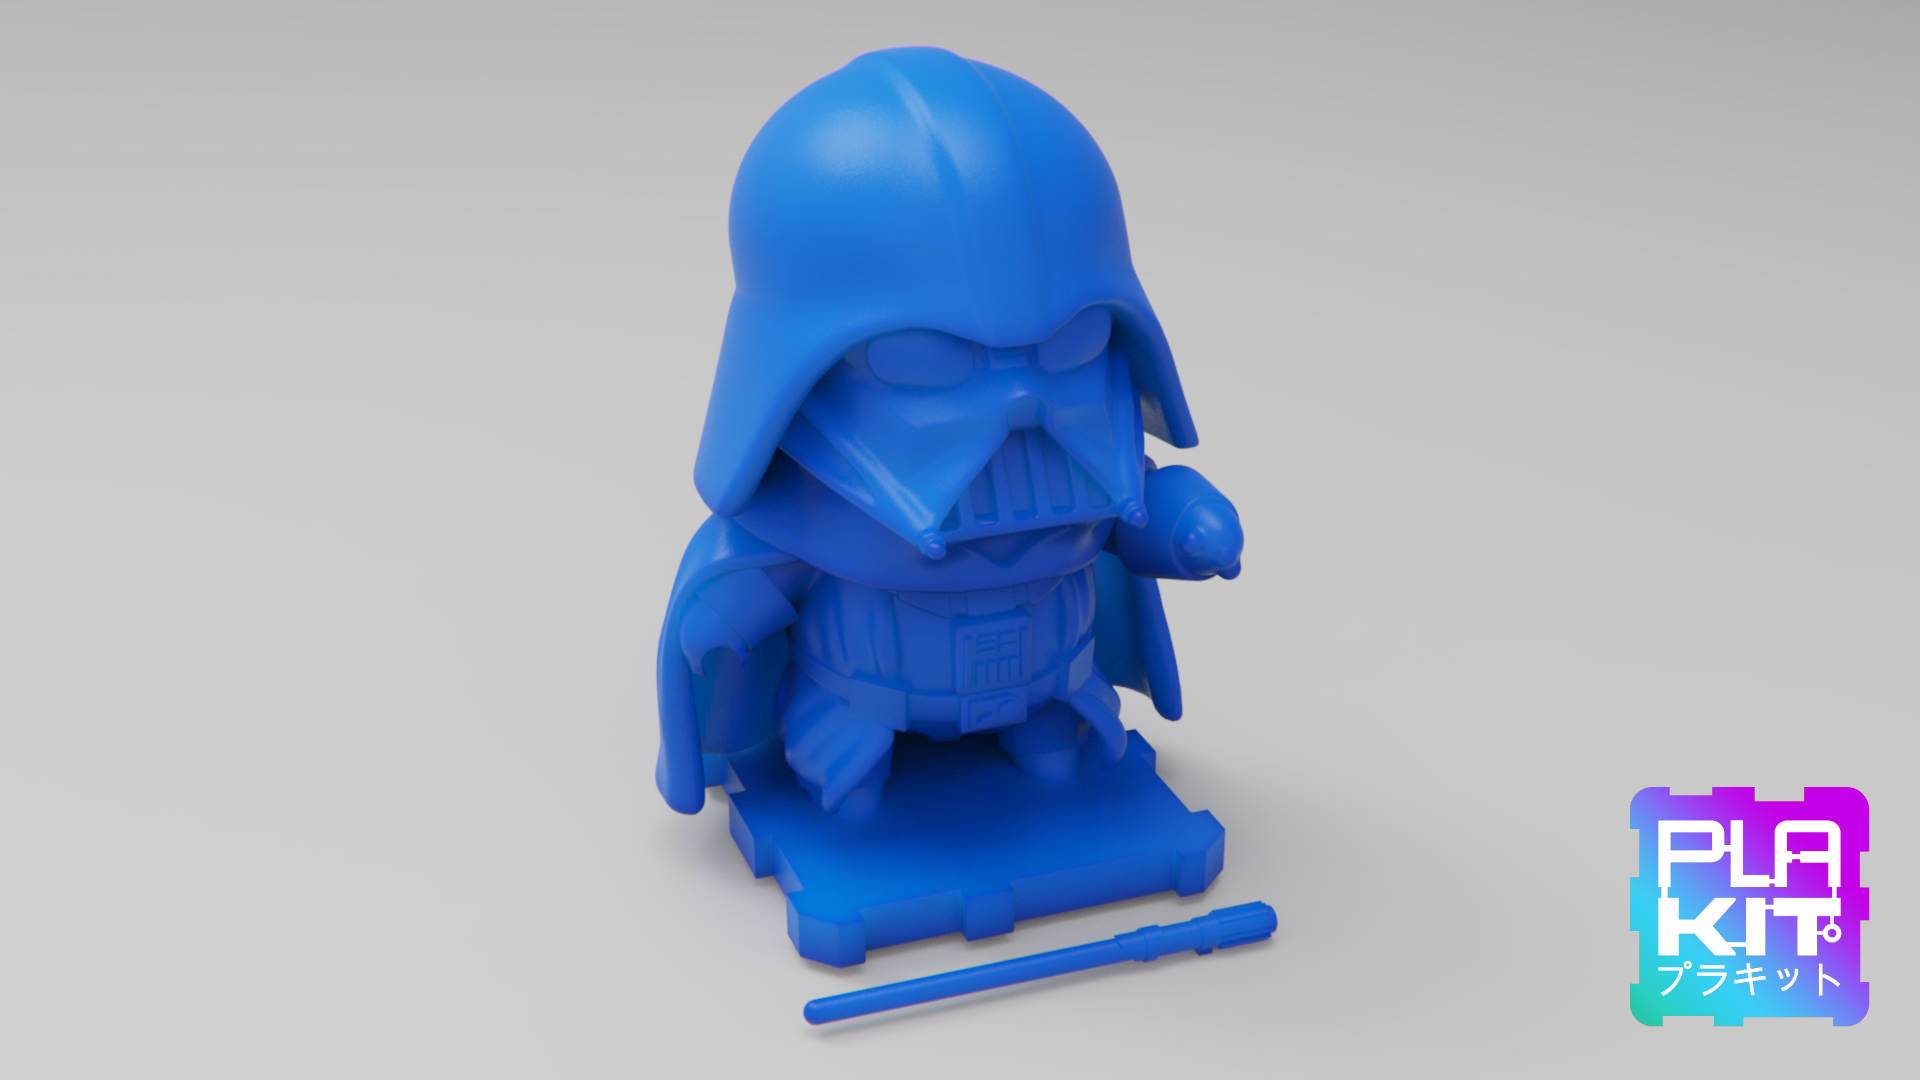 DARTHVADER1b.png Télécharger fichier STL gratuit Star Wars DARTH VADER ! • Objet pour imprimante 3D, purakito